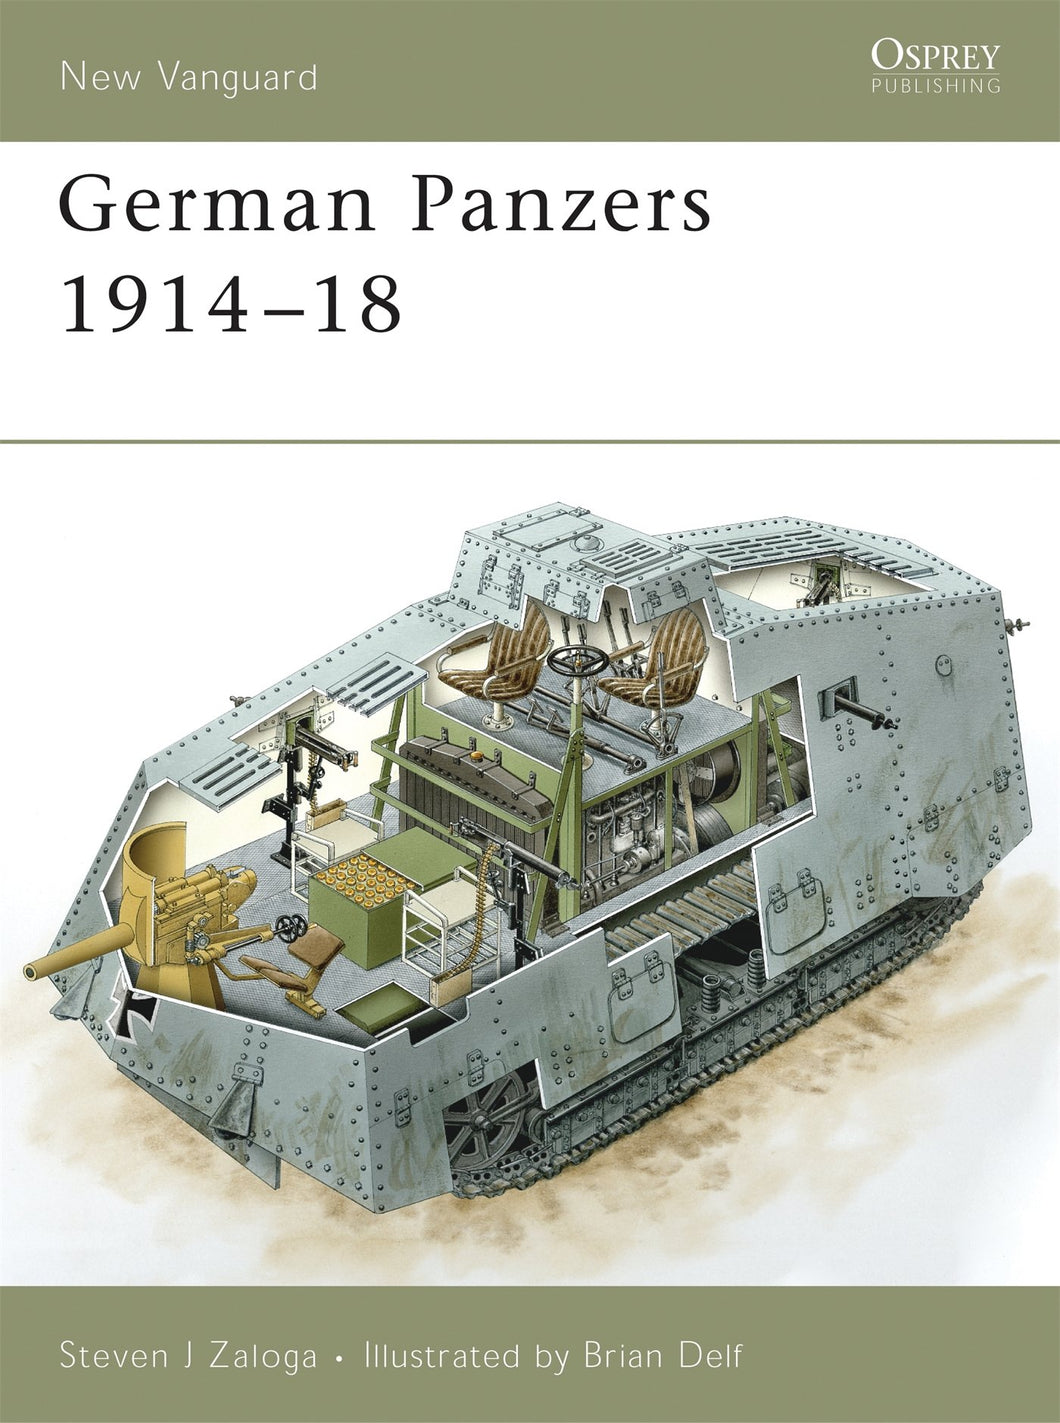 German Panzers 1914-18 - The Tank Museum